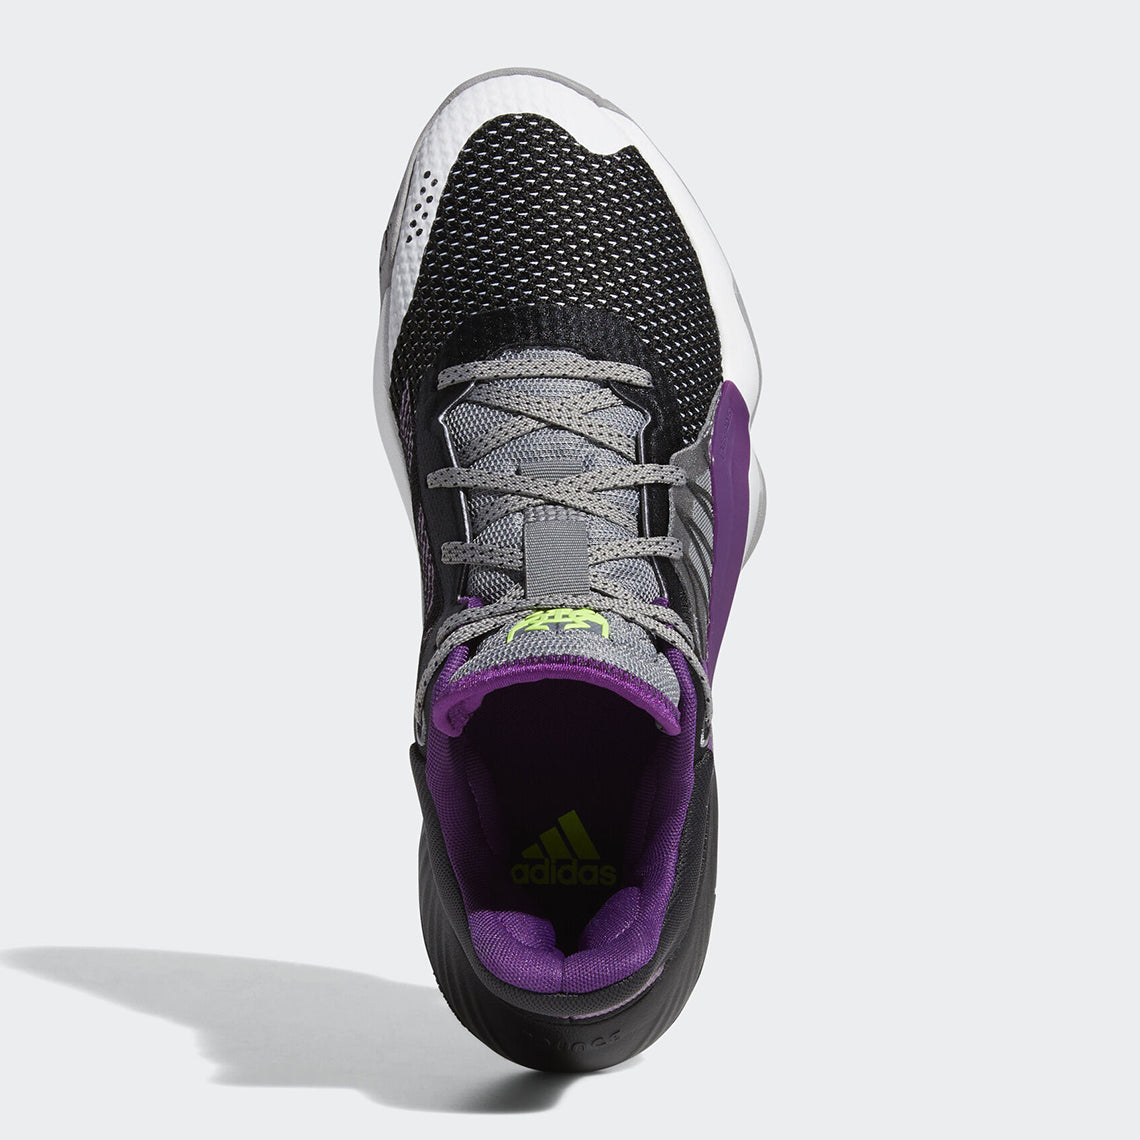 Adidas Issue 1 Joker Zapatos EH2134 - UK 13 - Trade Sports